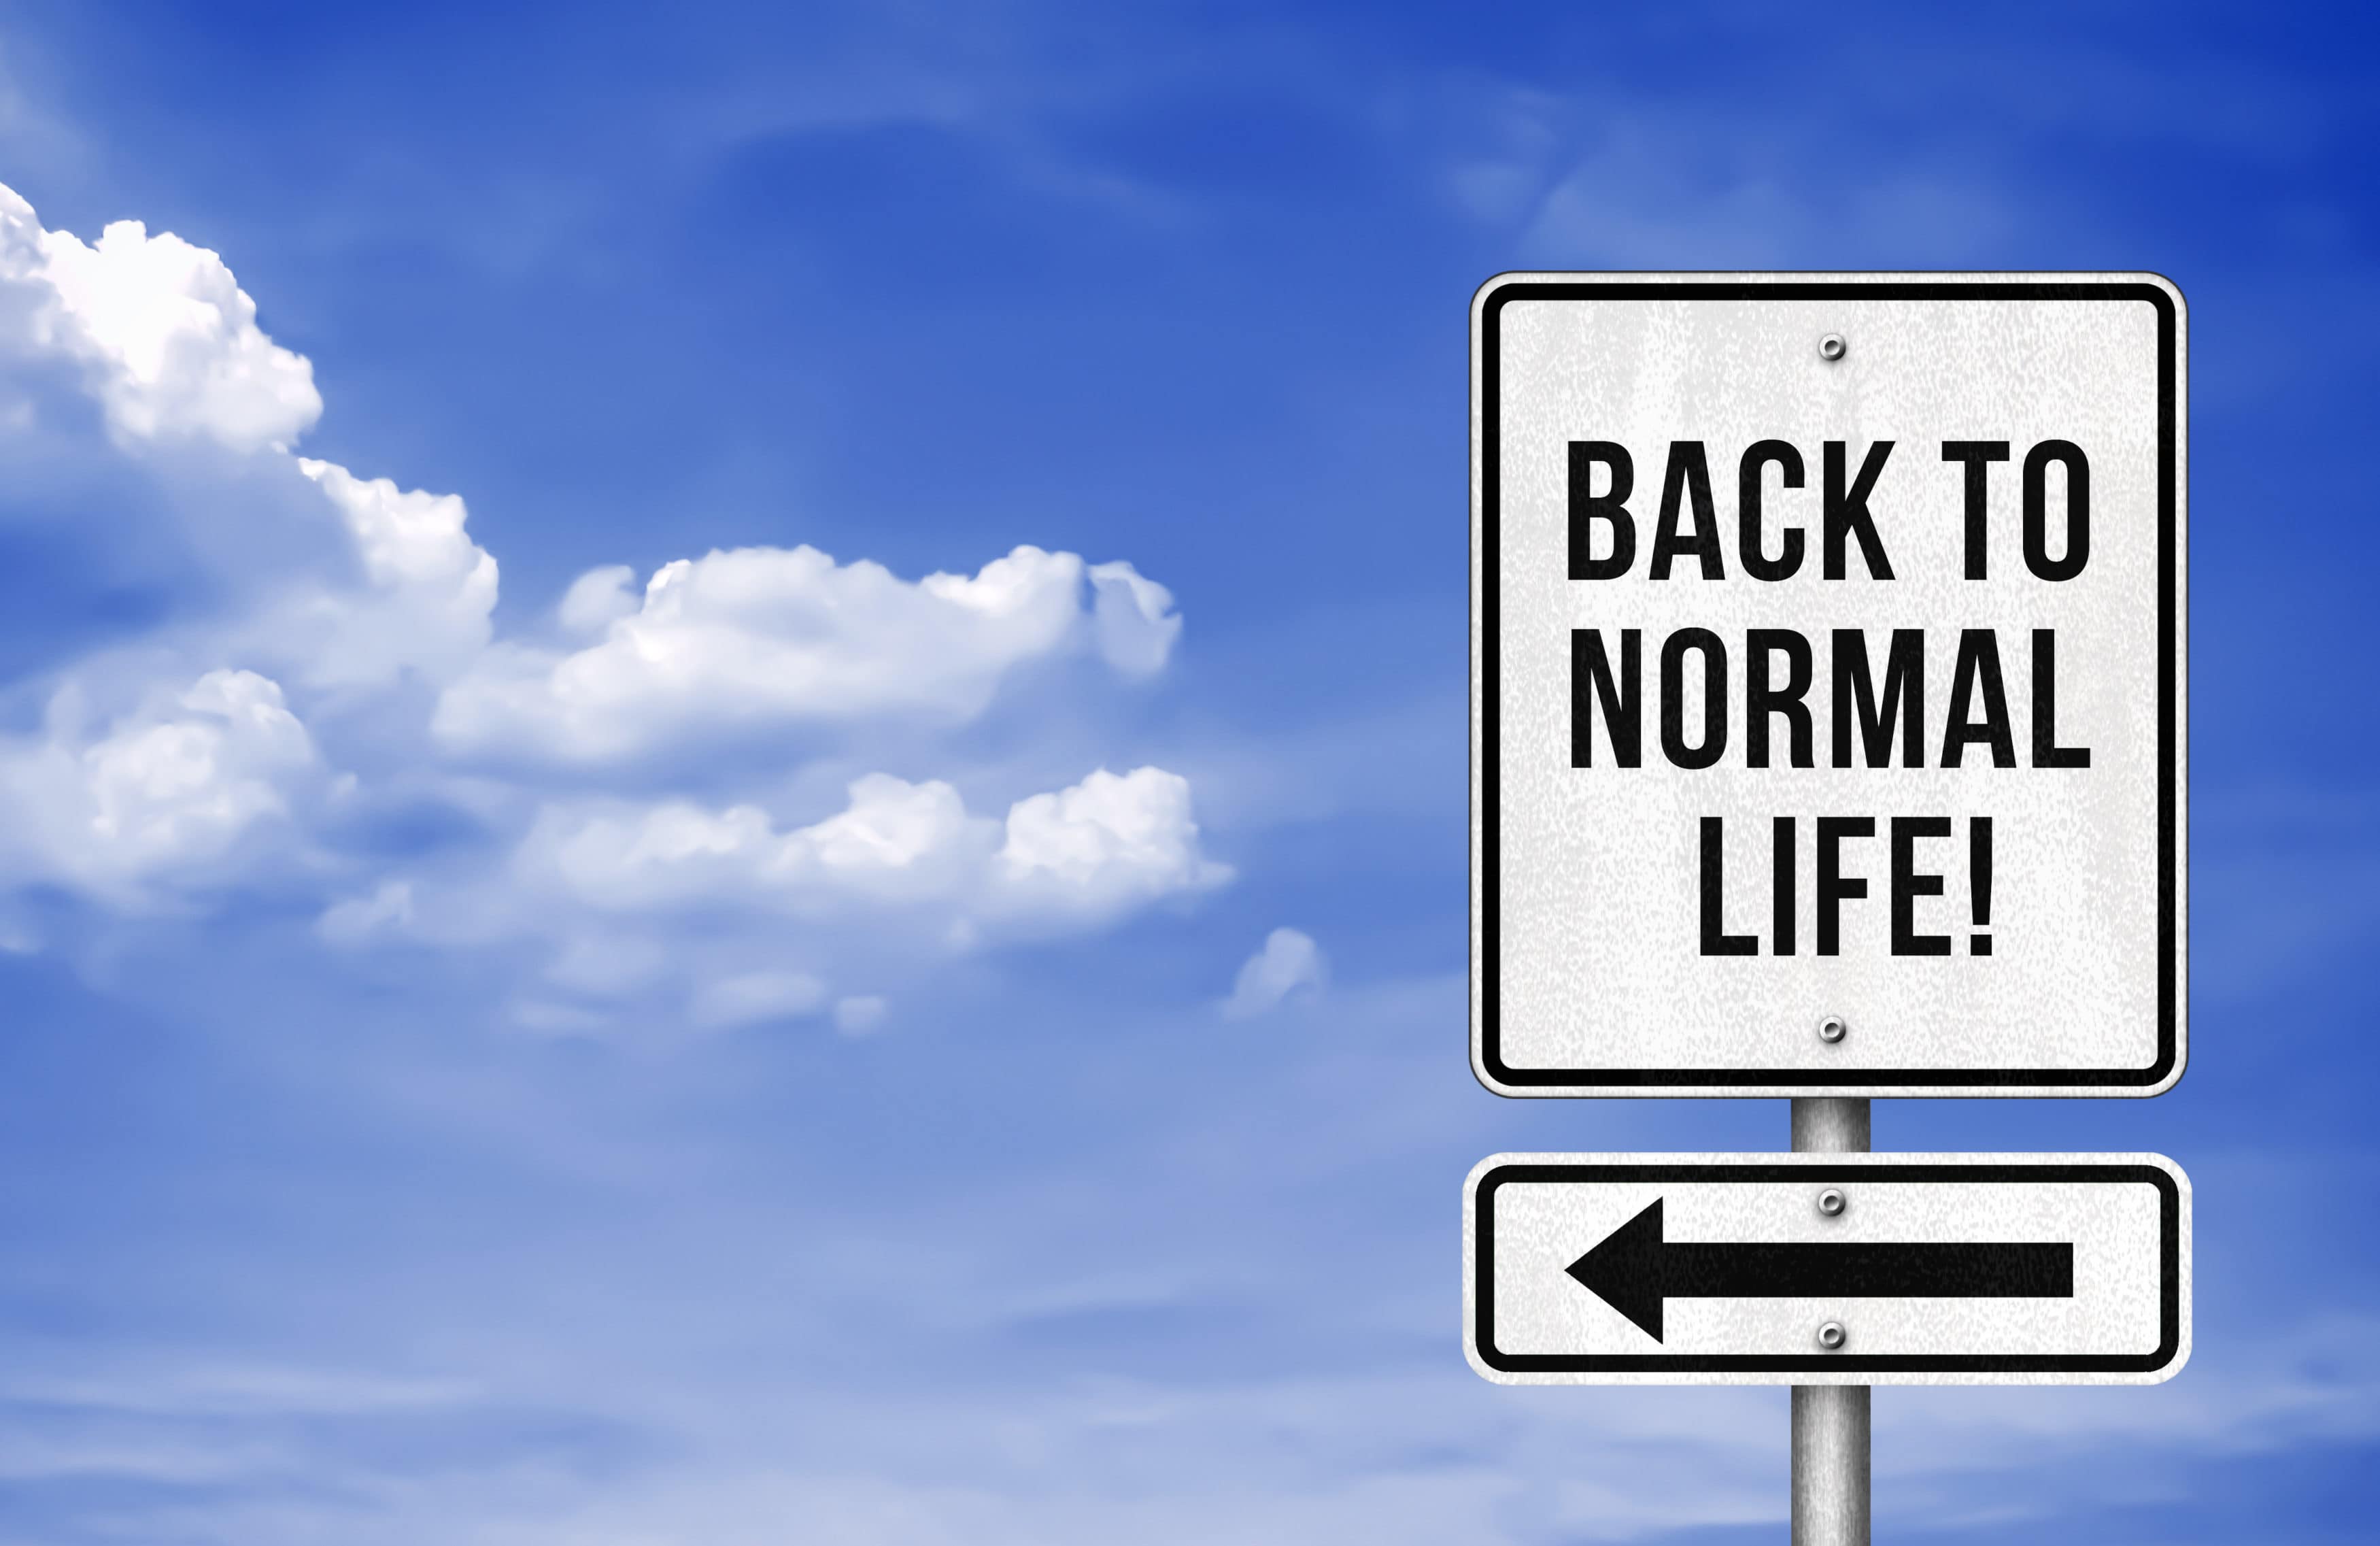 Back to Normal Life - roadsign information